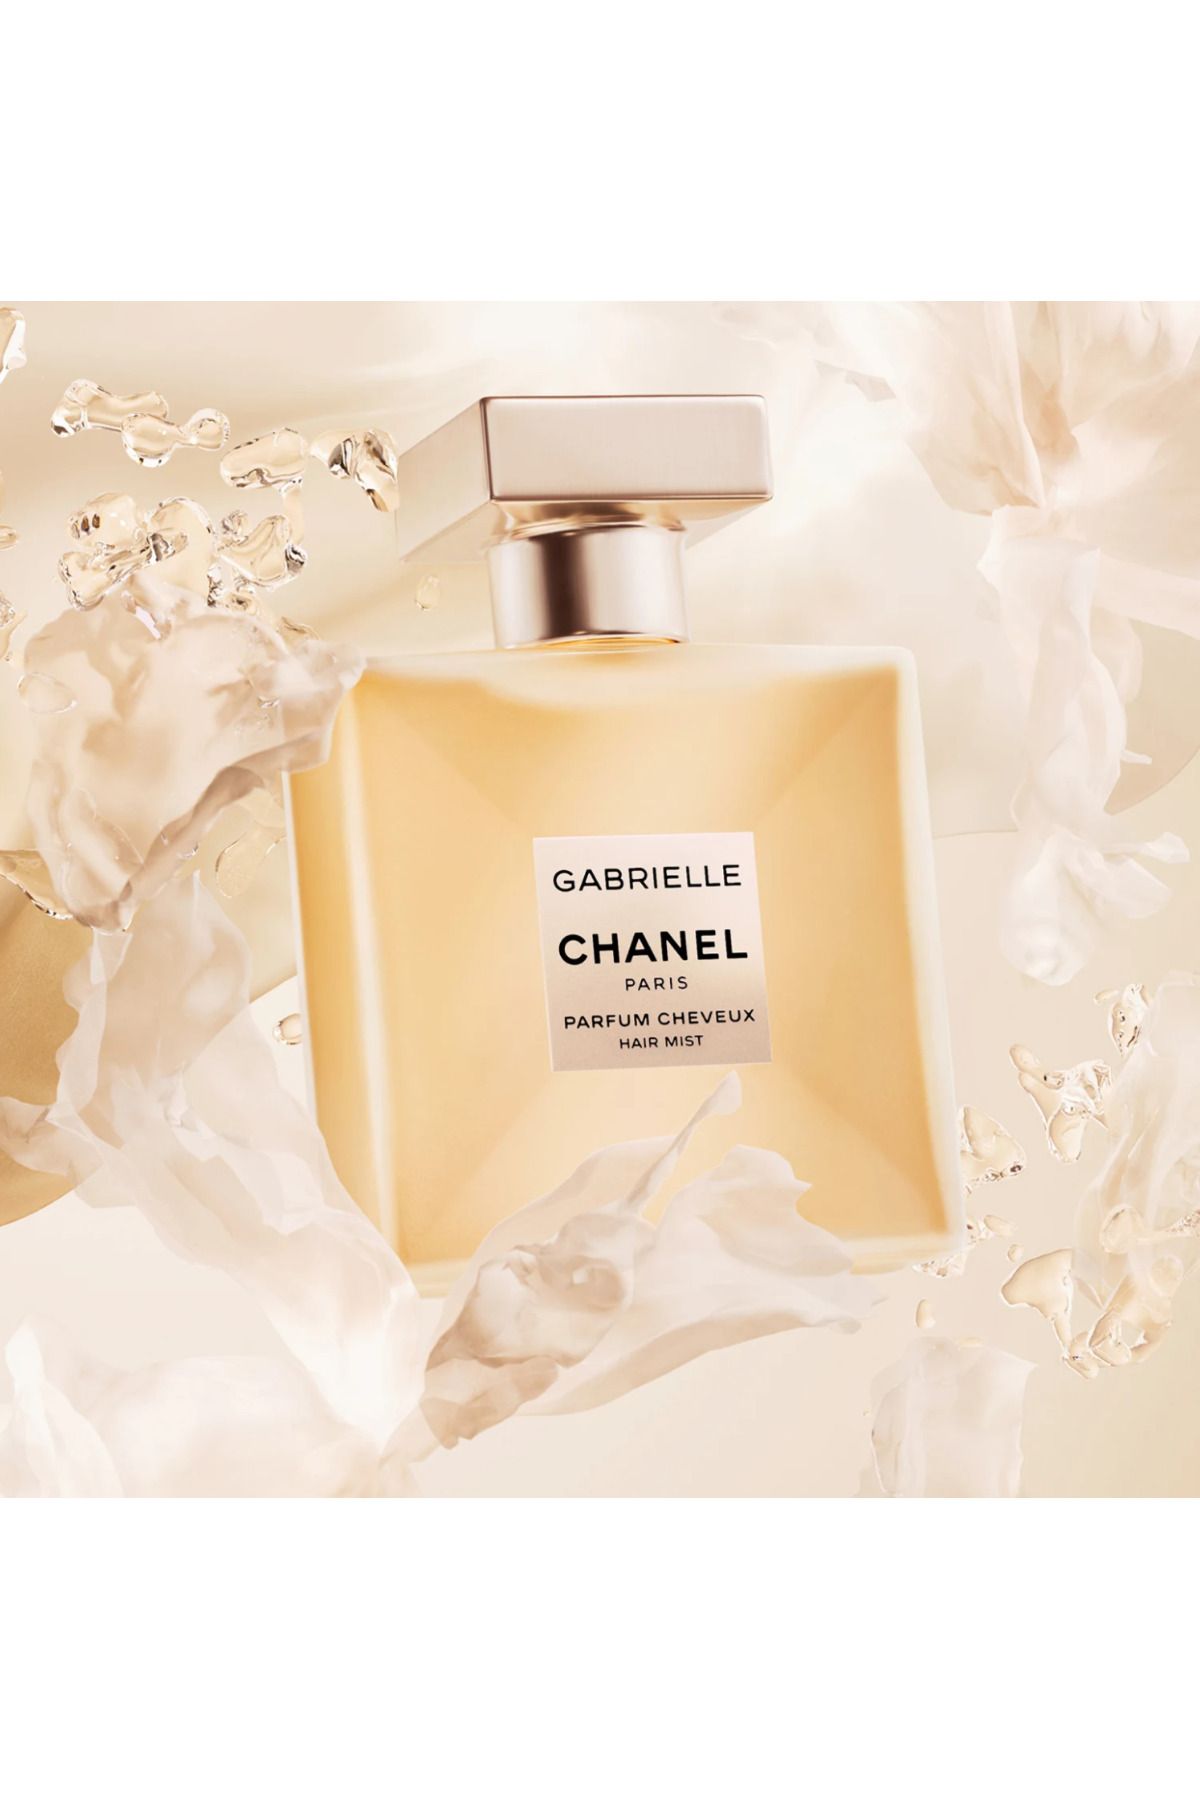 Chanel اسپری عطر مو Gabrielle رایحه گل های یاس و مریم گلی و پرتقال  40 میل